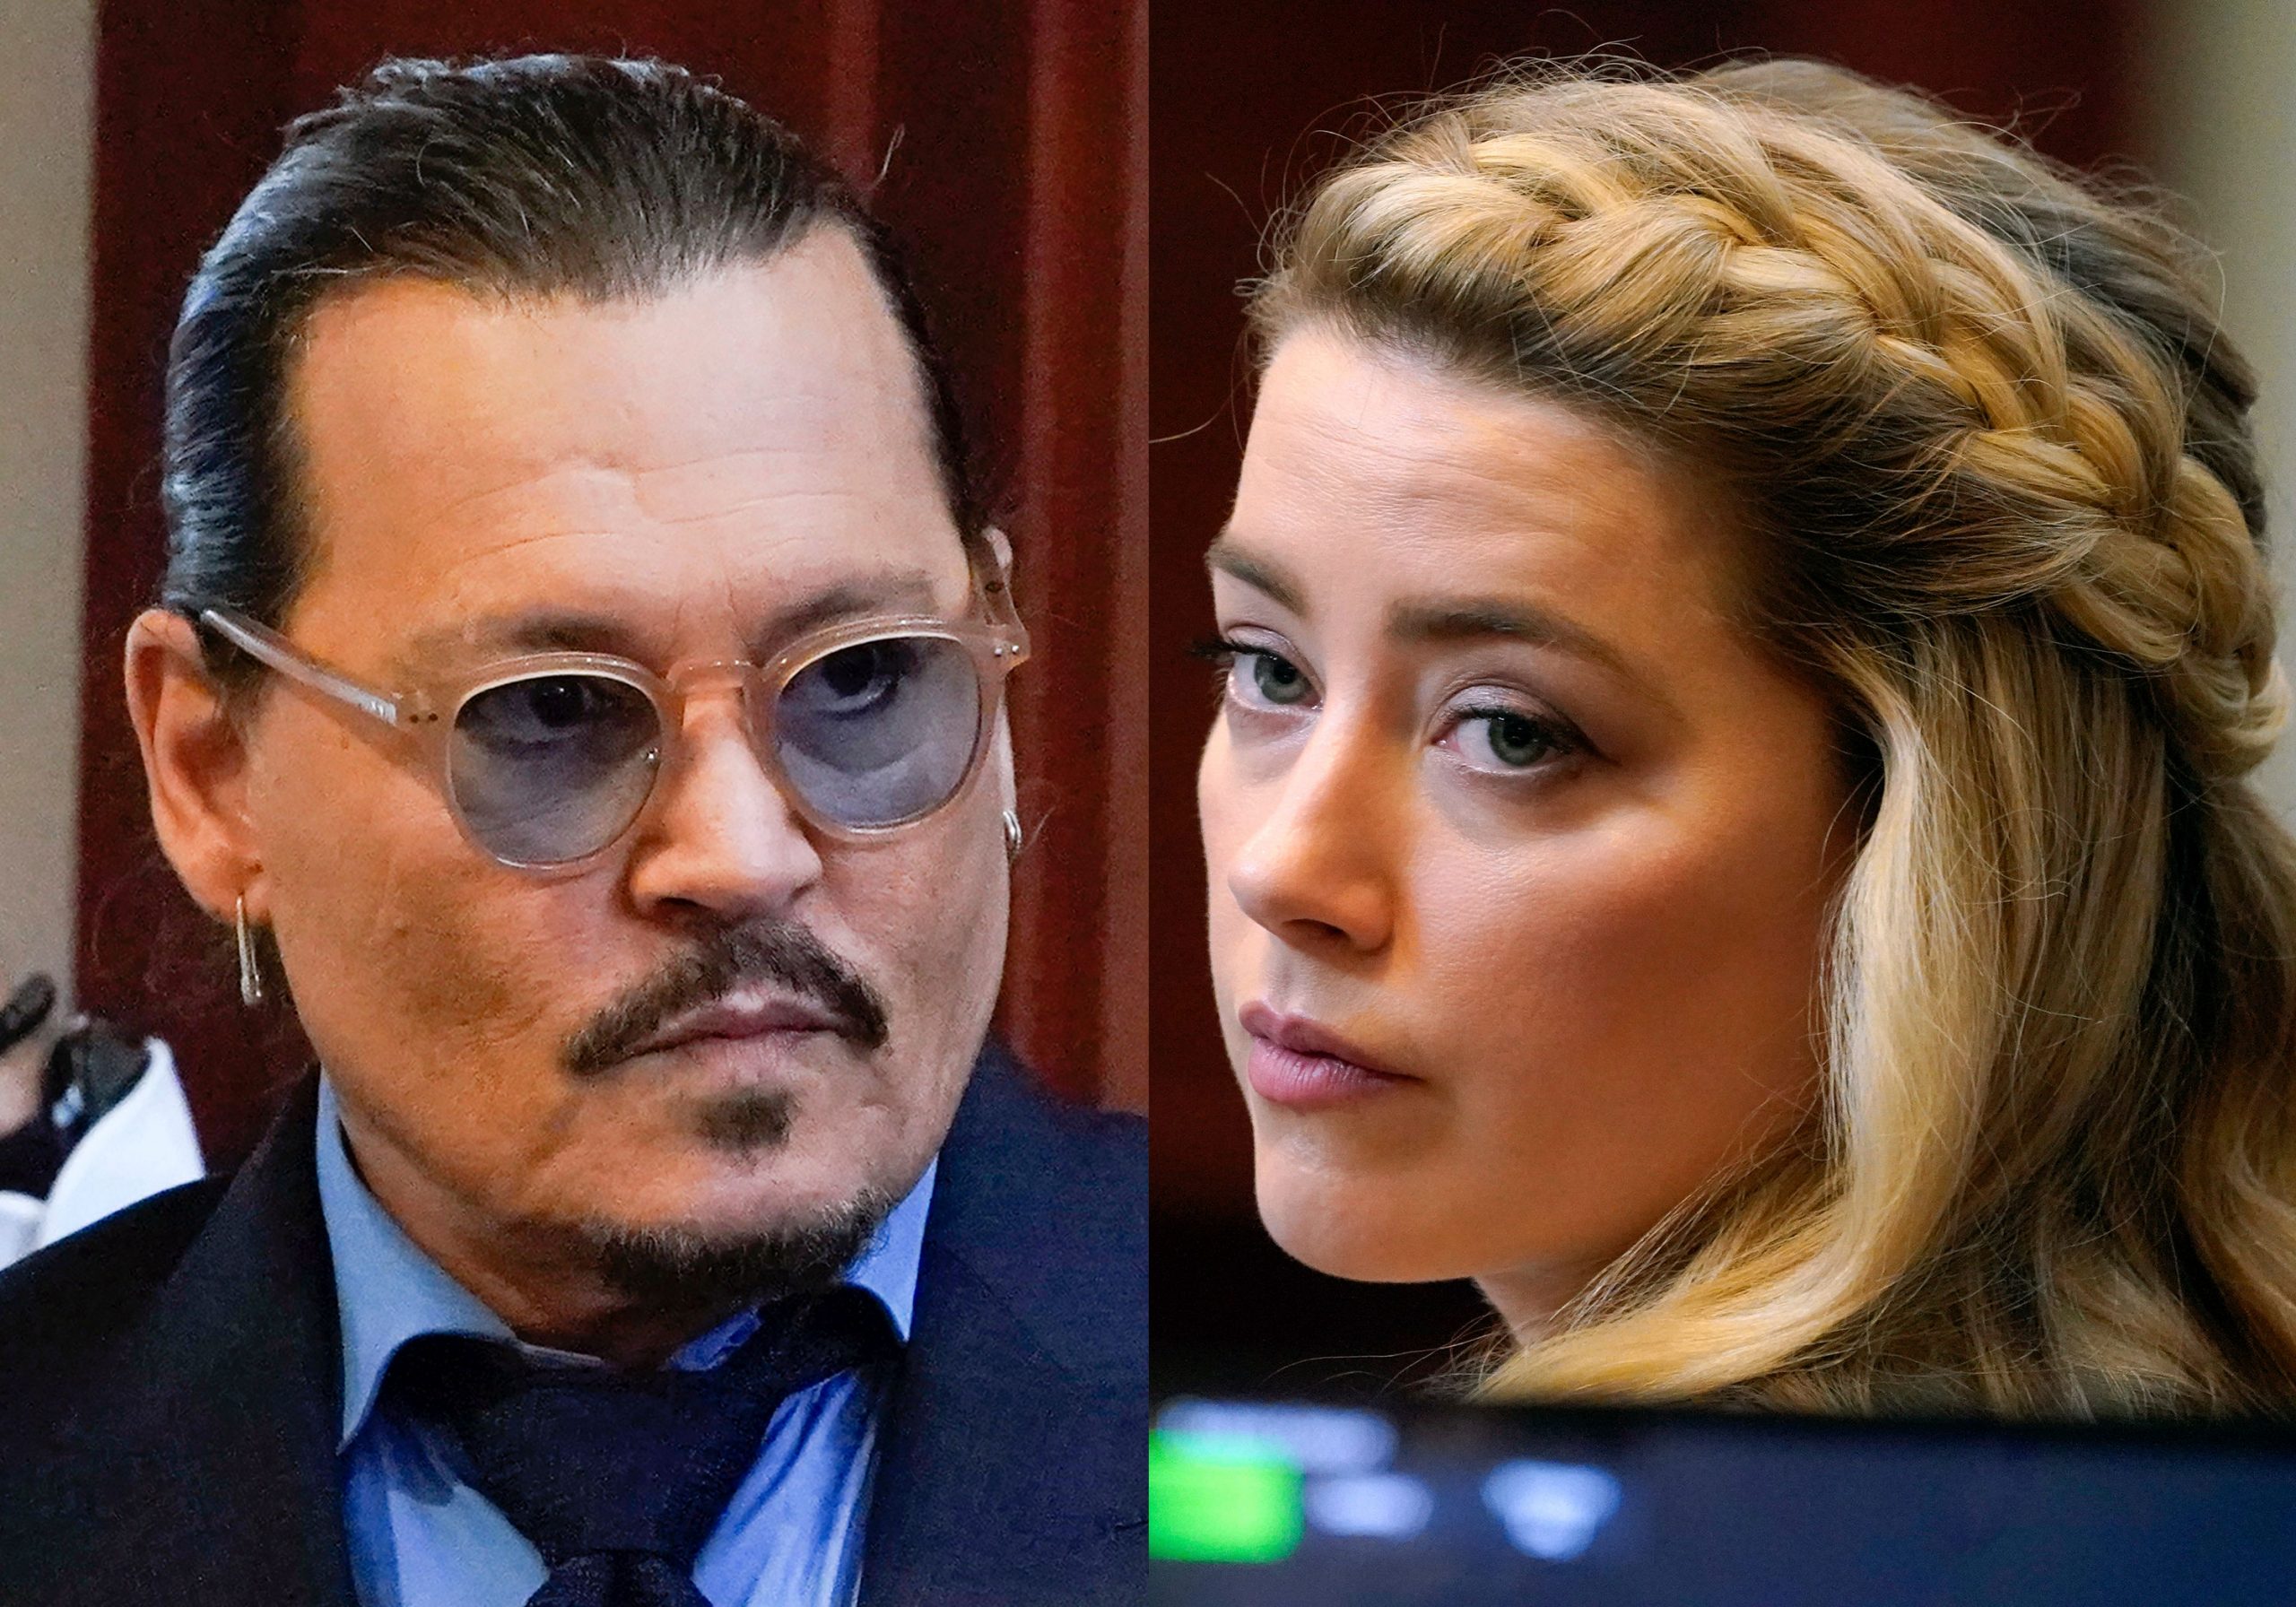 Johnny Depp wins his defamation case against ex-wife Amber Heard